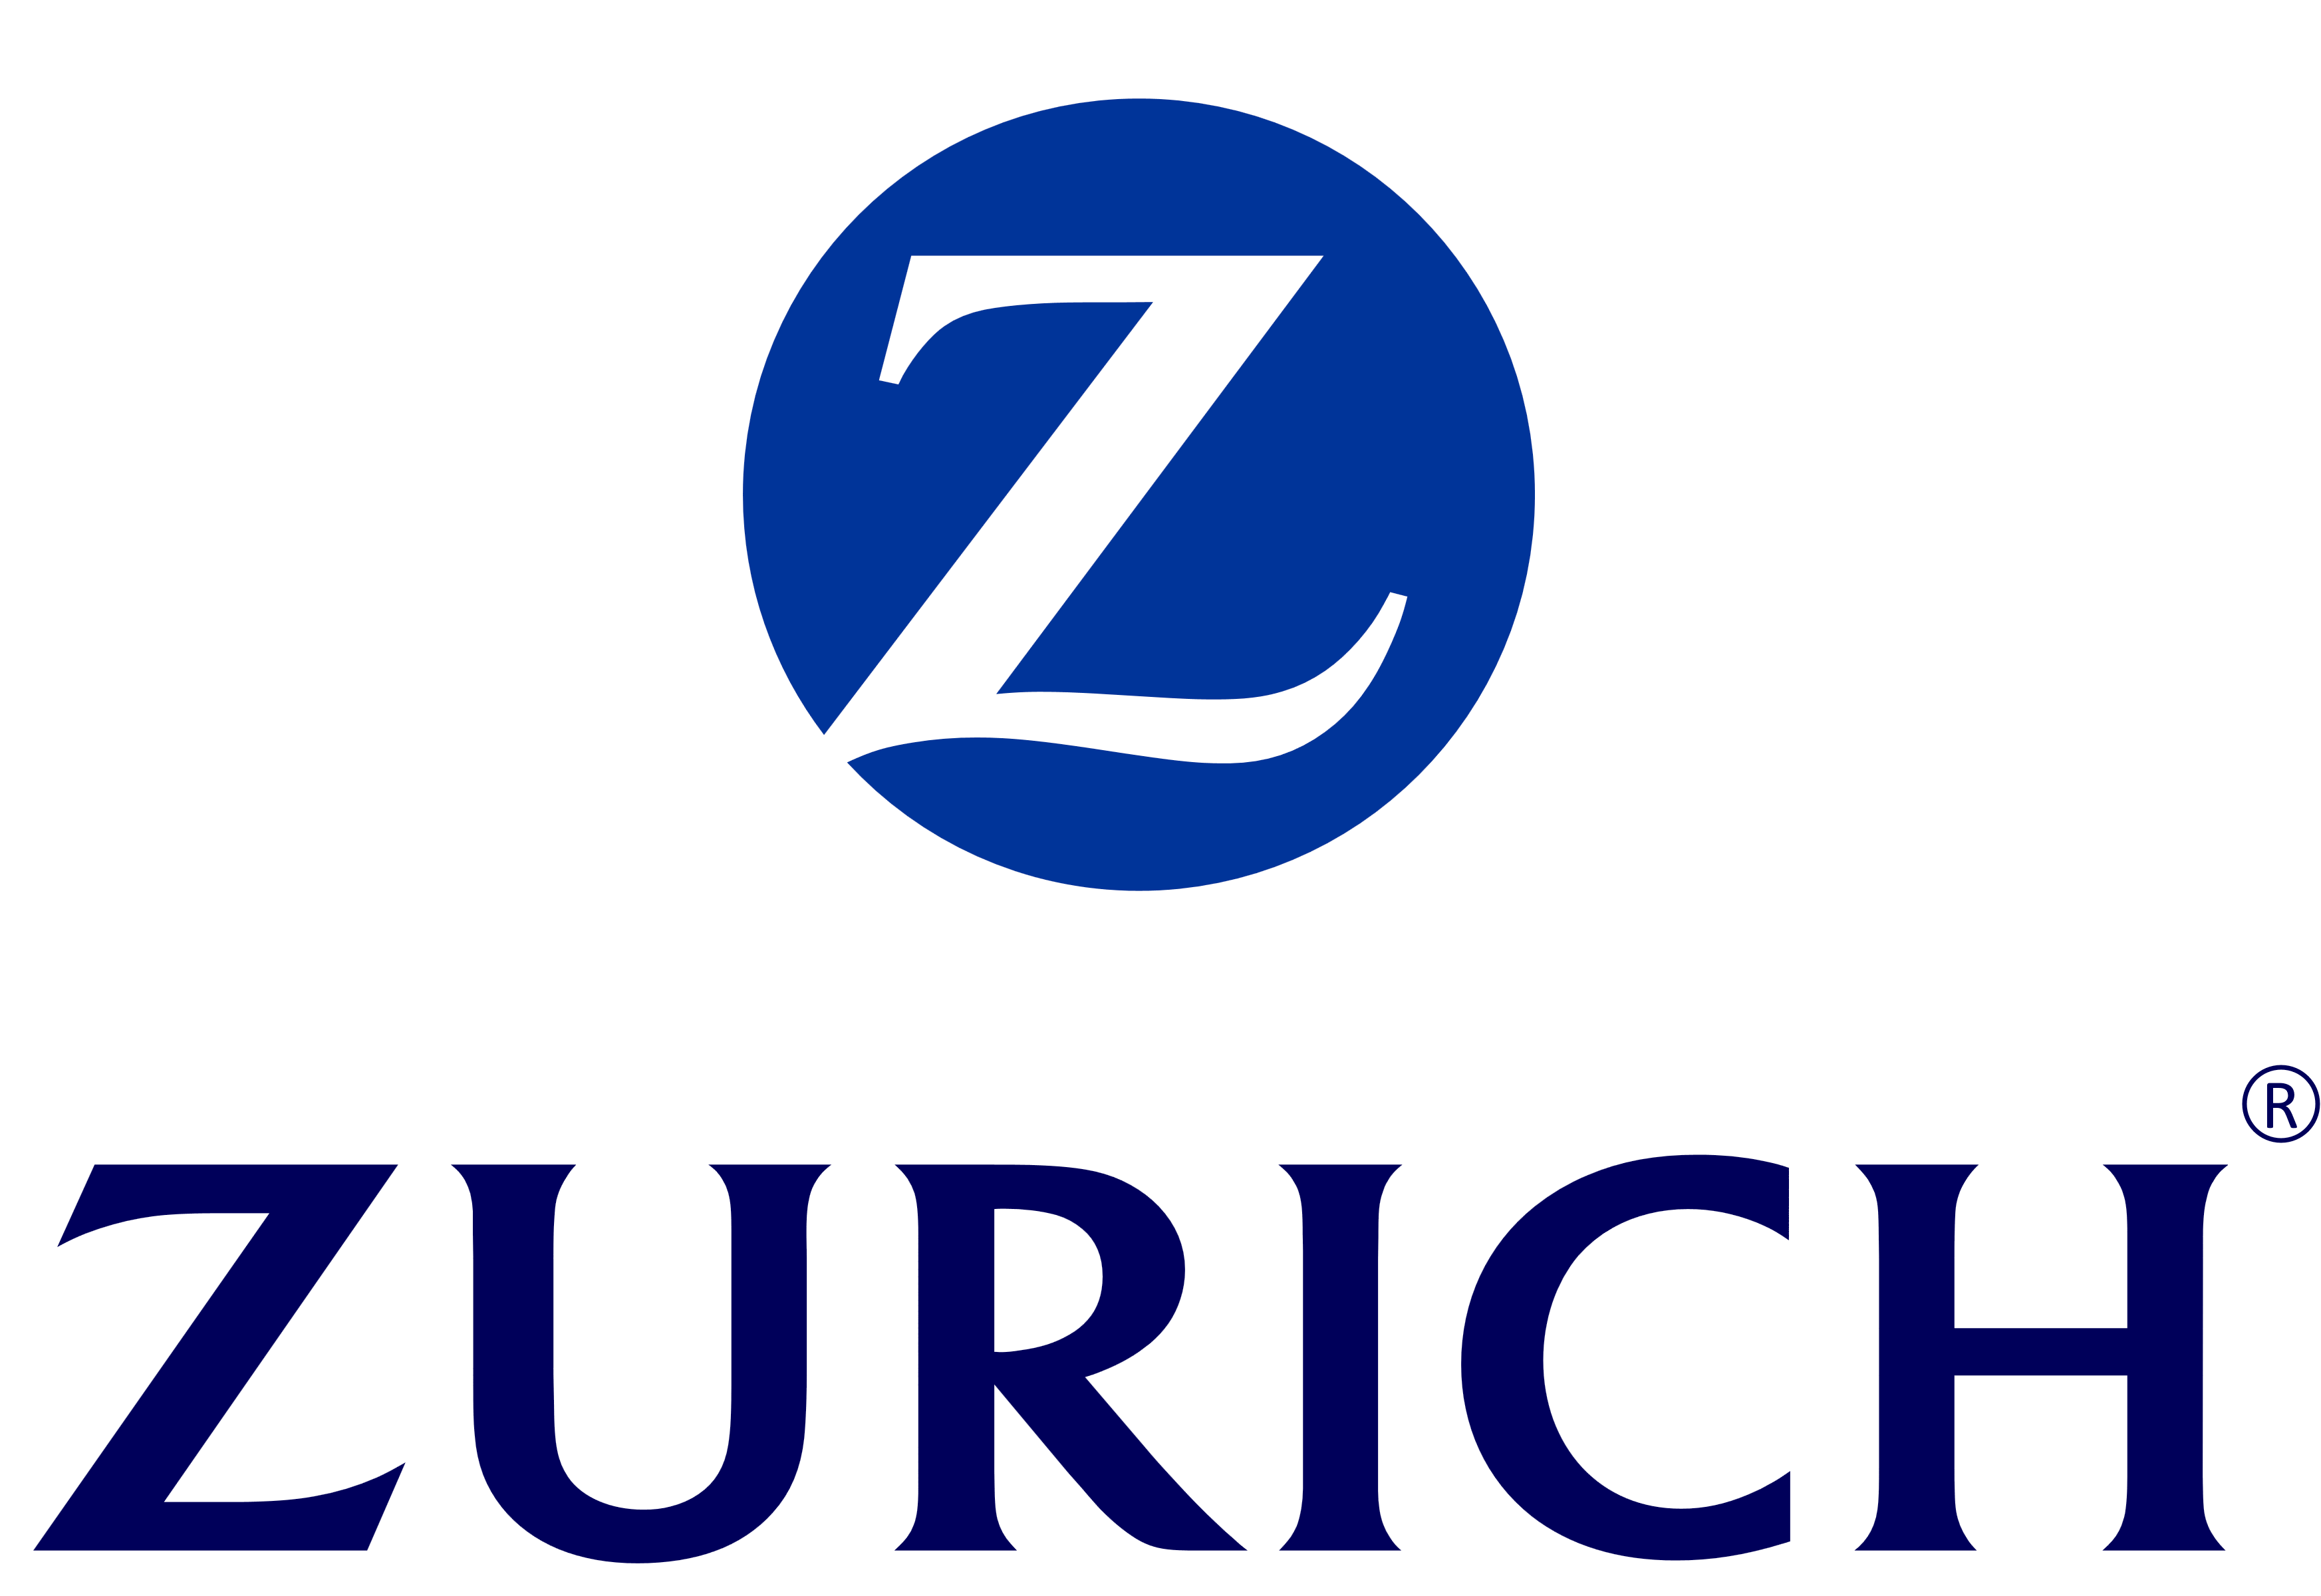 Zurich Insurance logo, logotype